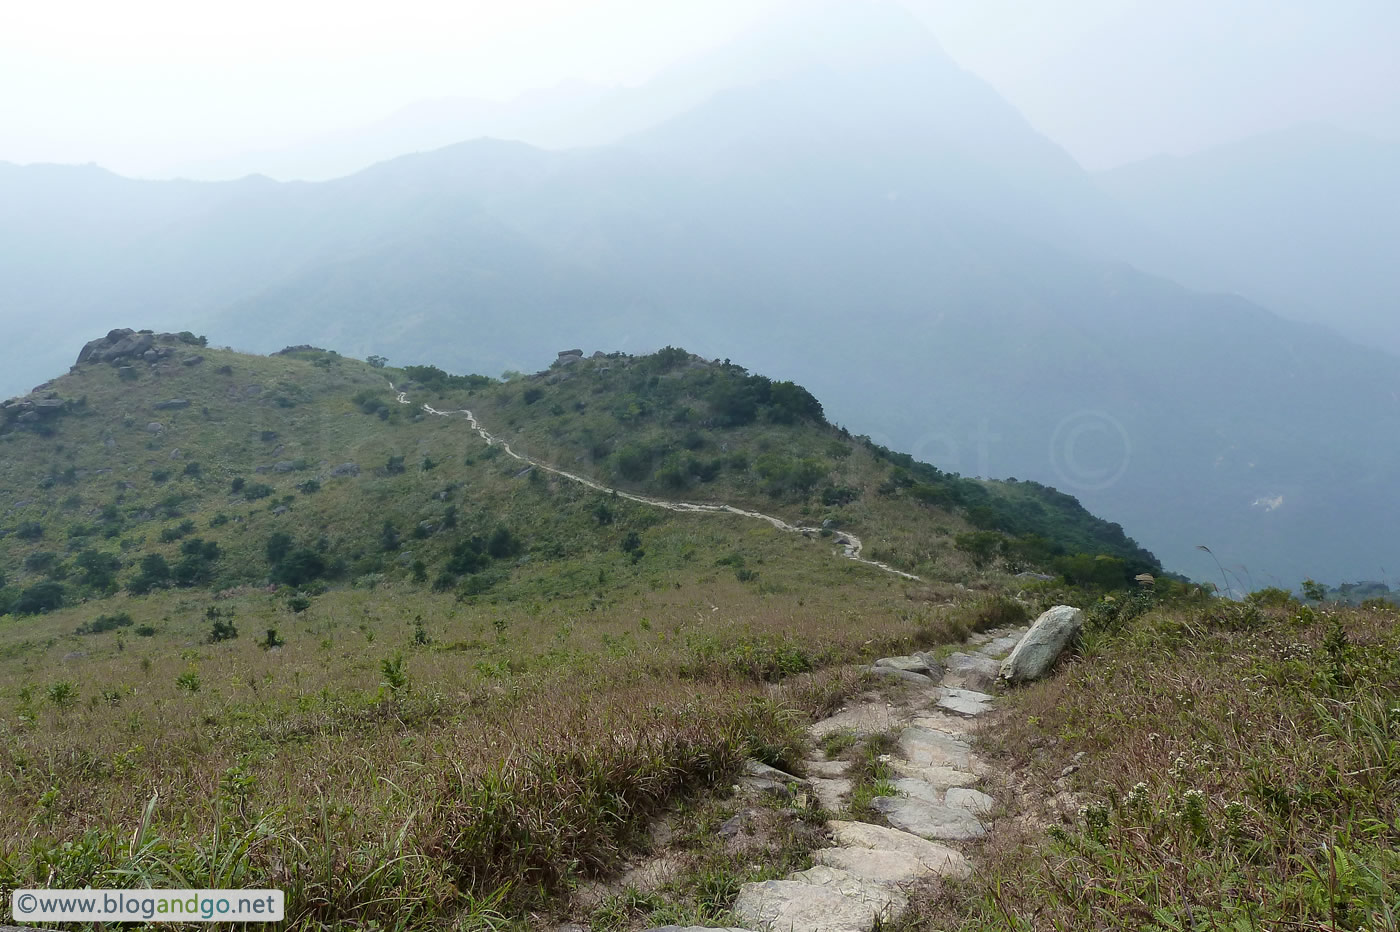 Lantail Trail - Lantau Peak looms